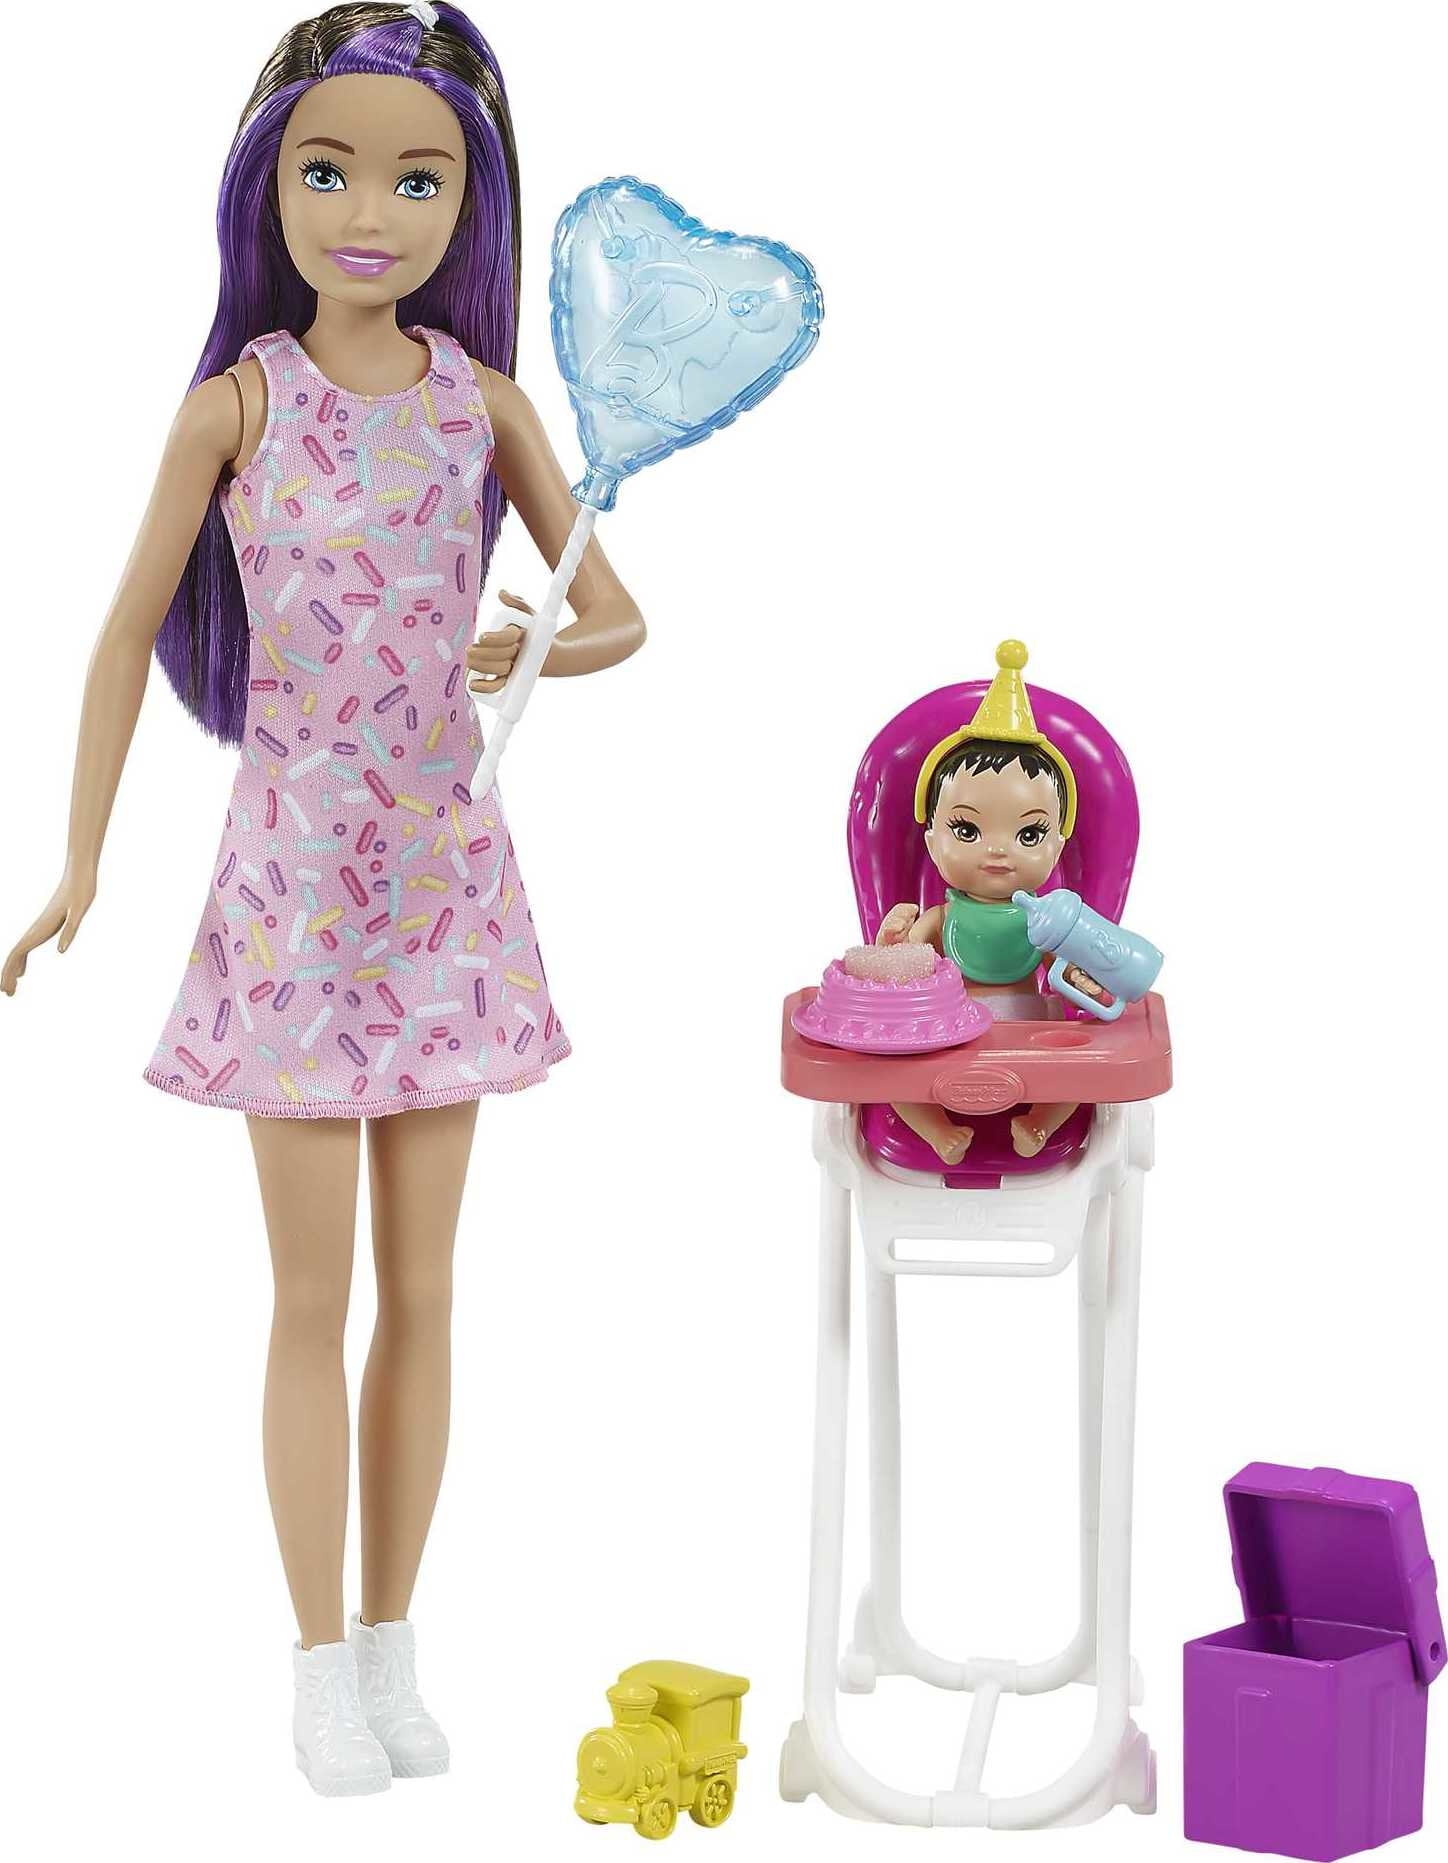 NEW 2019 Barbie Skipper Babysitter Doll Baby Playtime Toy Floor Gym Pink Ball 